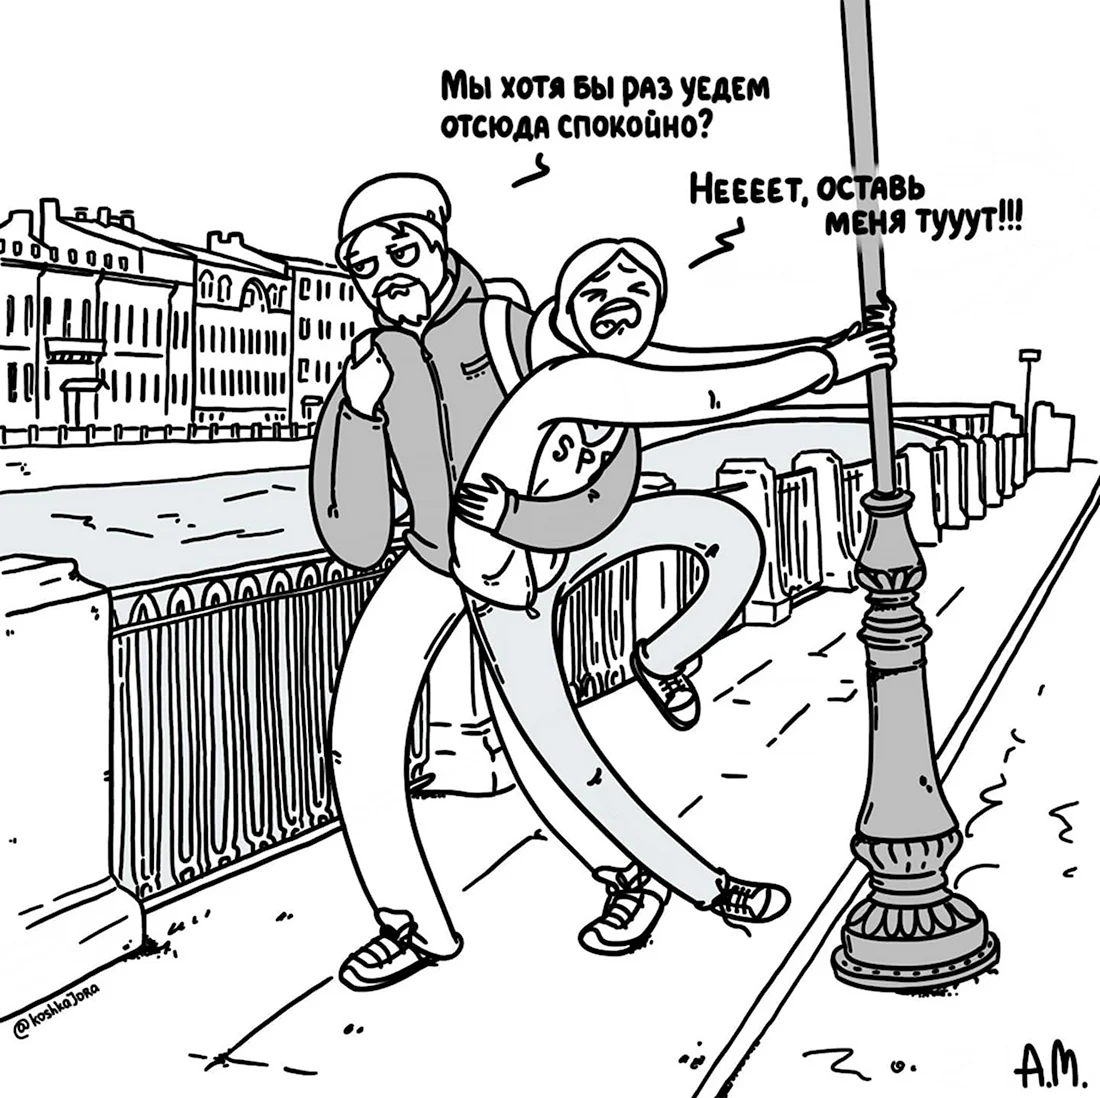 Комикс про Петербург. Анекдот в картинке